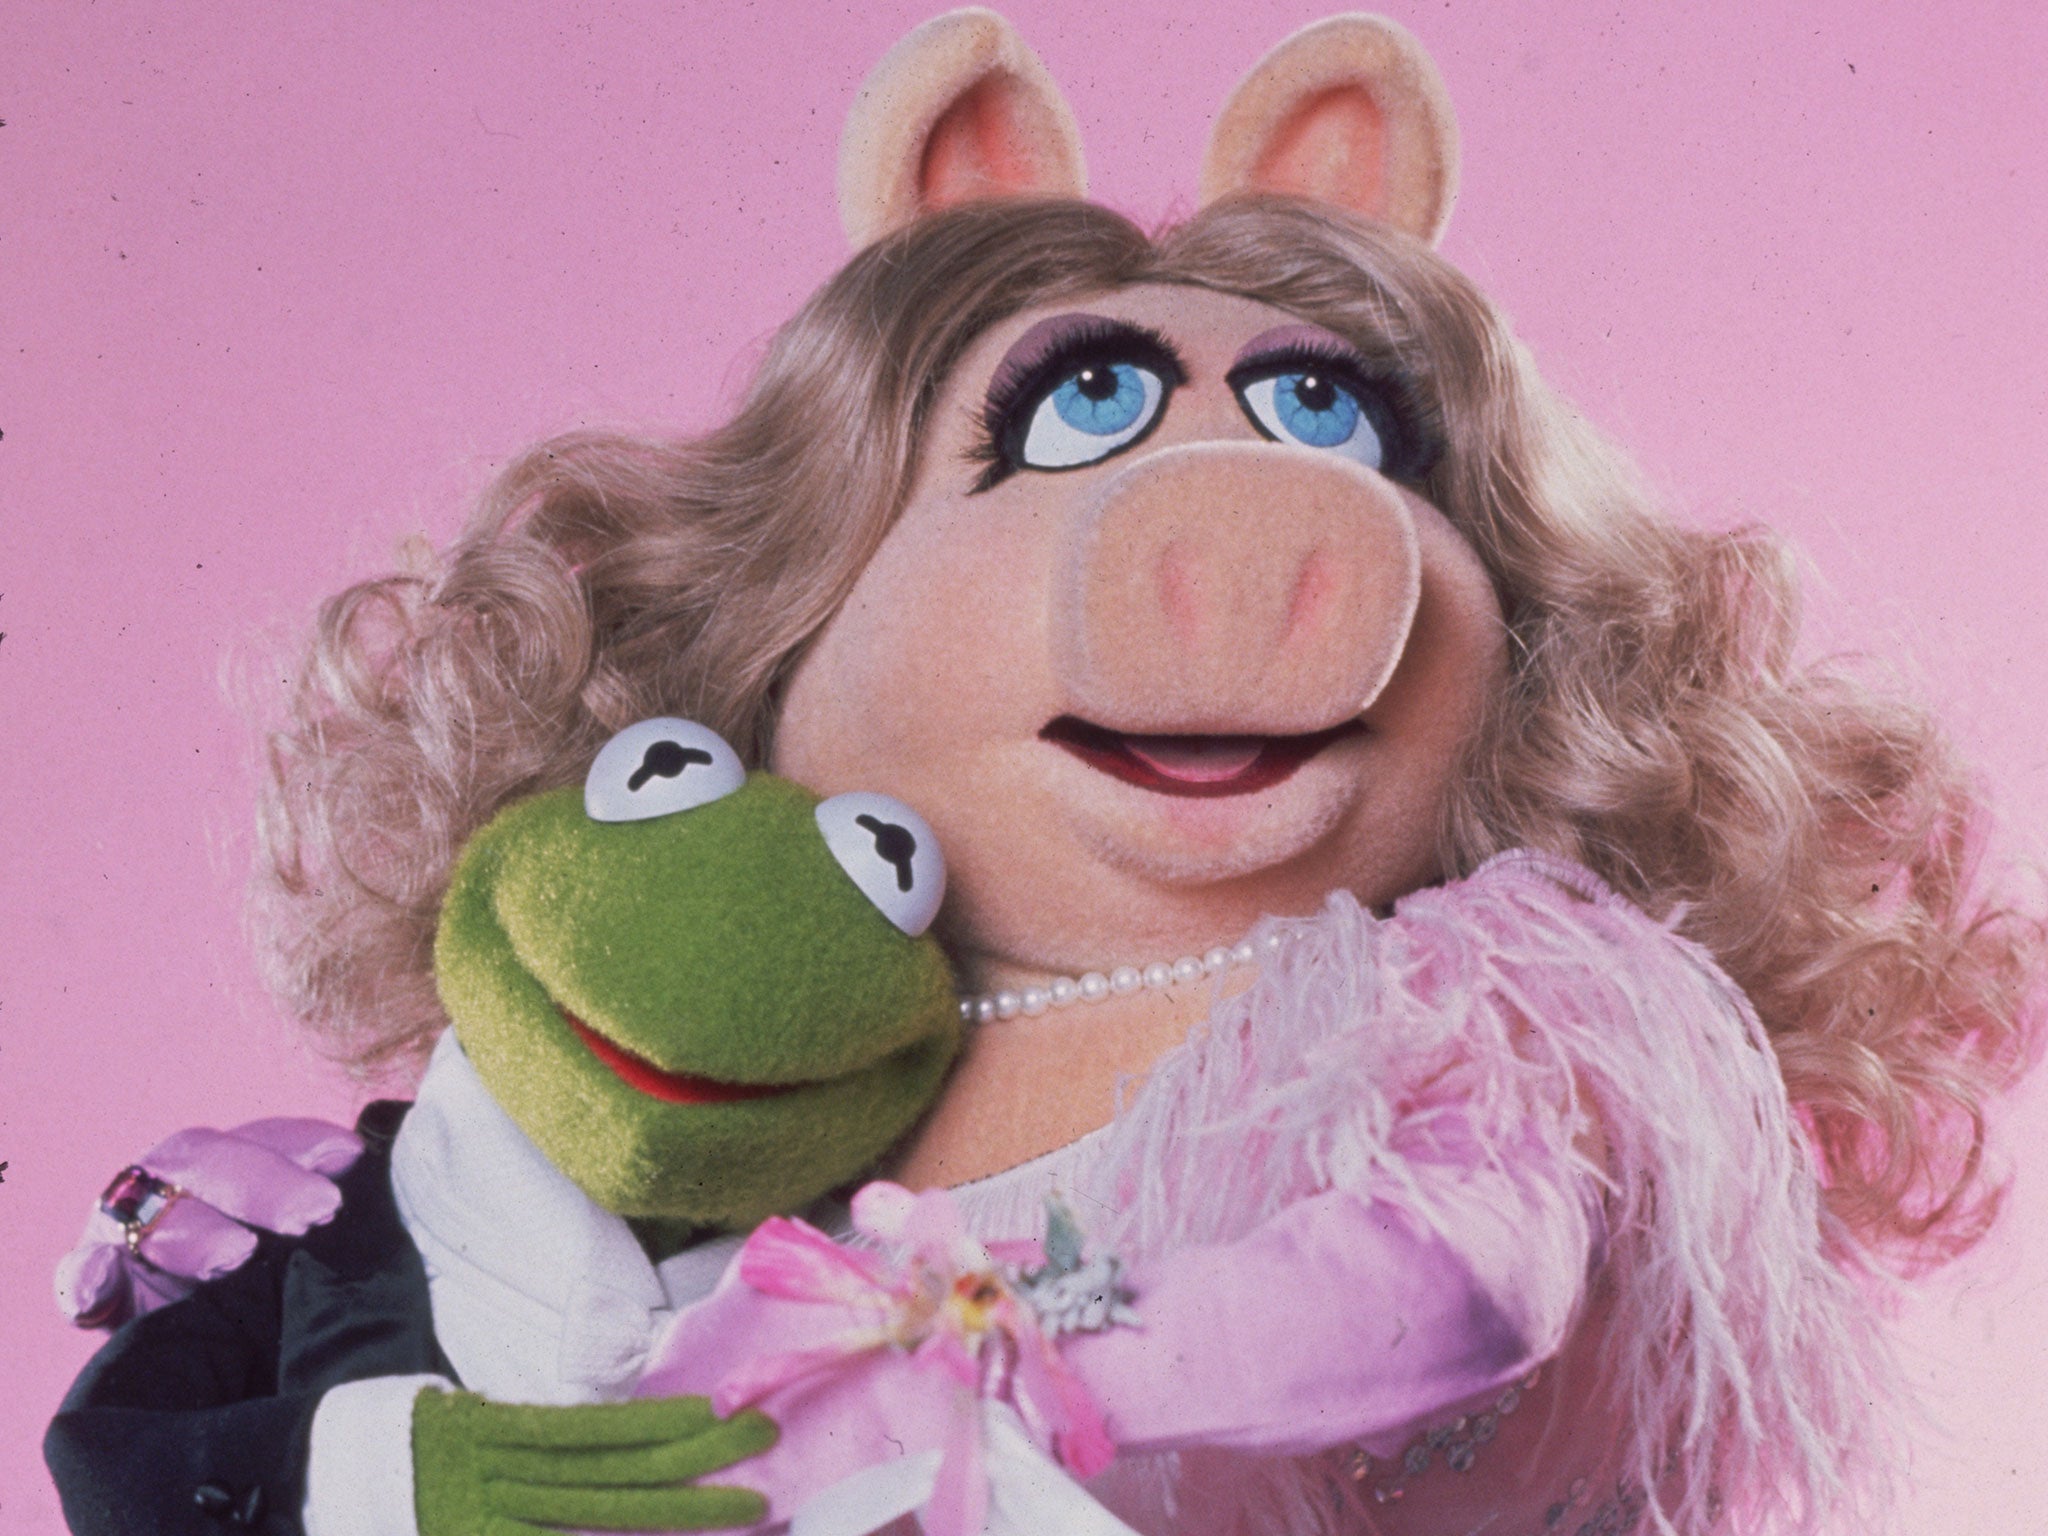 Miss Piggy and Kermit have split up in latest of devastating celebrity breakups